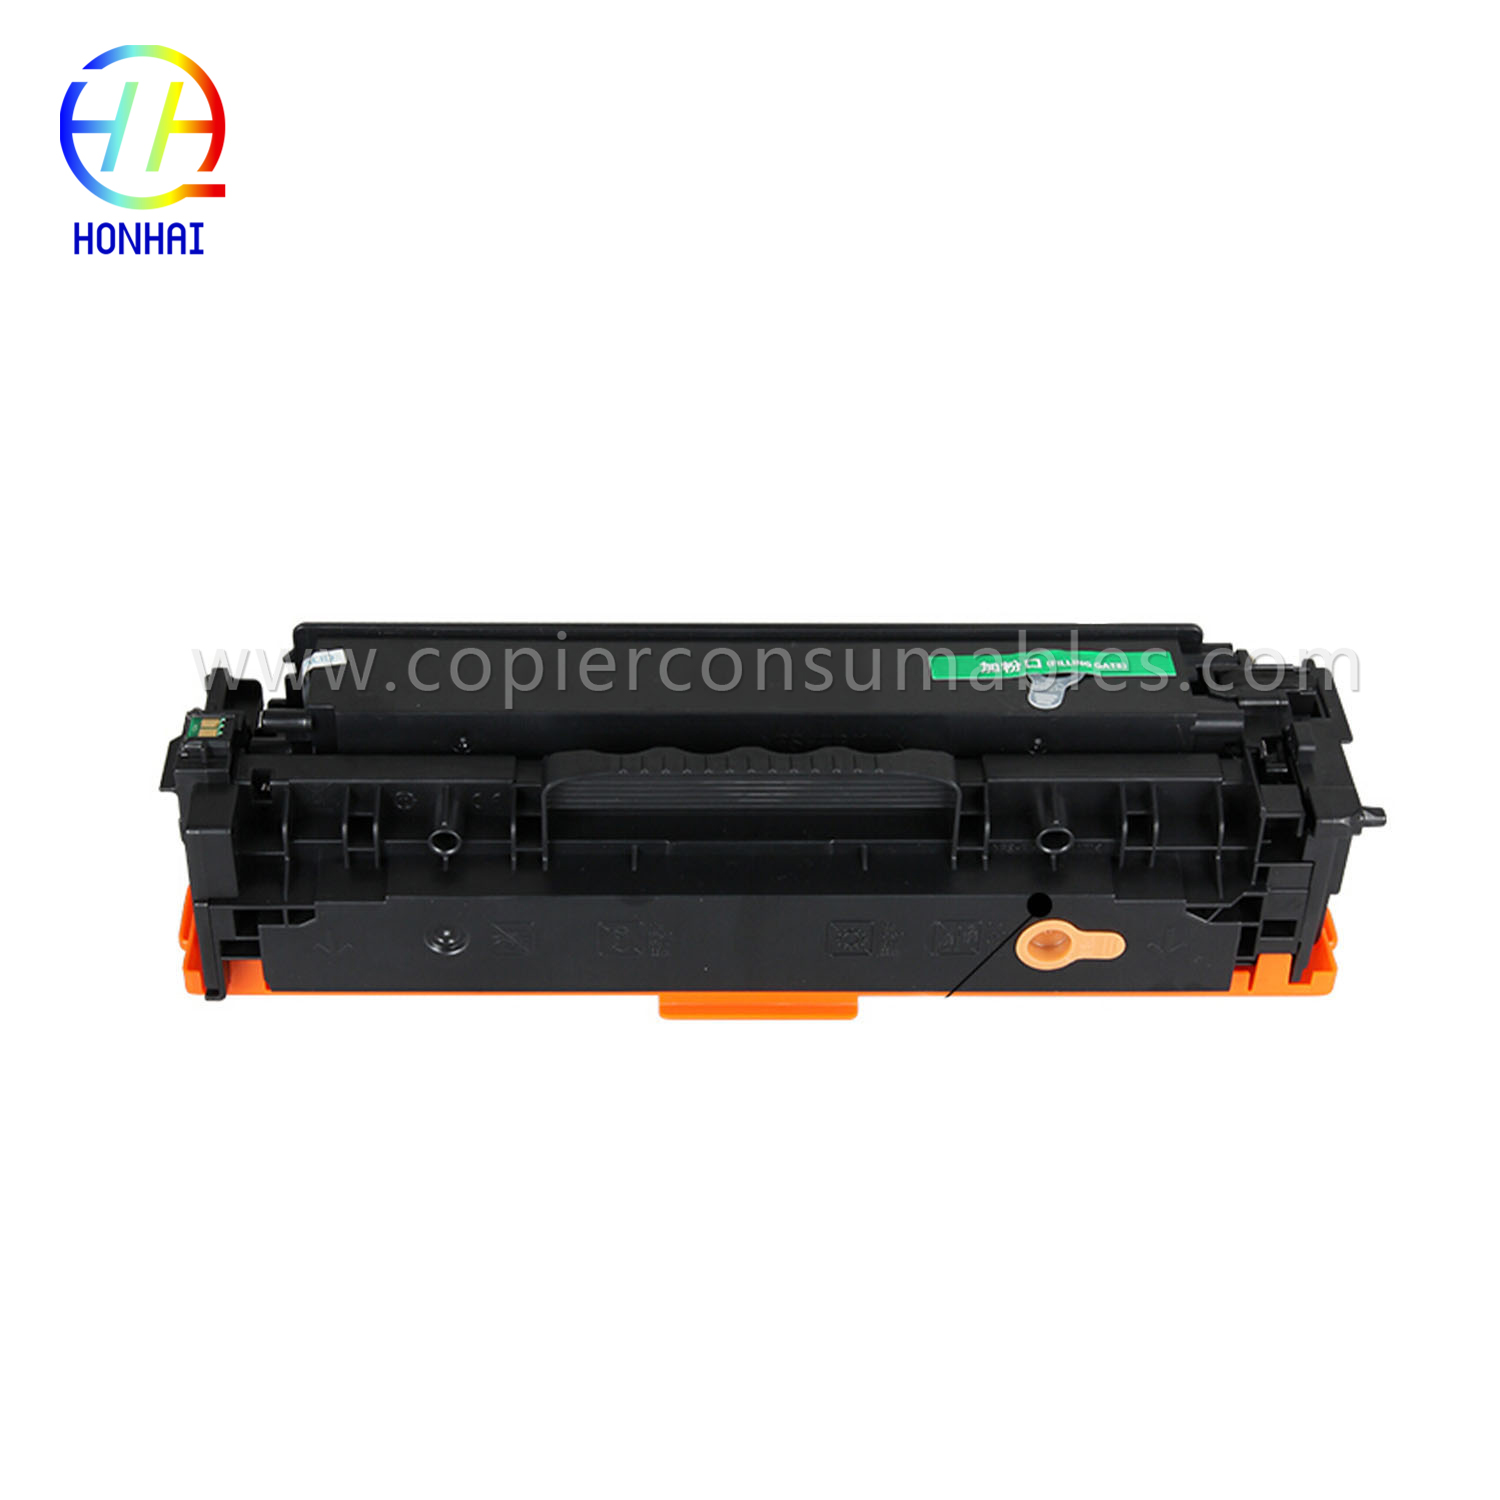 Kartrid Toner untuk HP Laserjet PRO 400 Warna Mfp M451nw M451DN M451dw PRO 300 Warna Mfp M375nw (CE410A) 拷贝